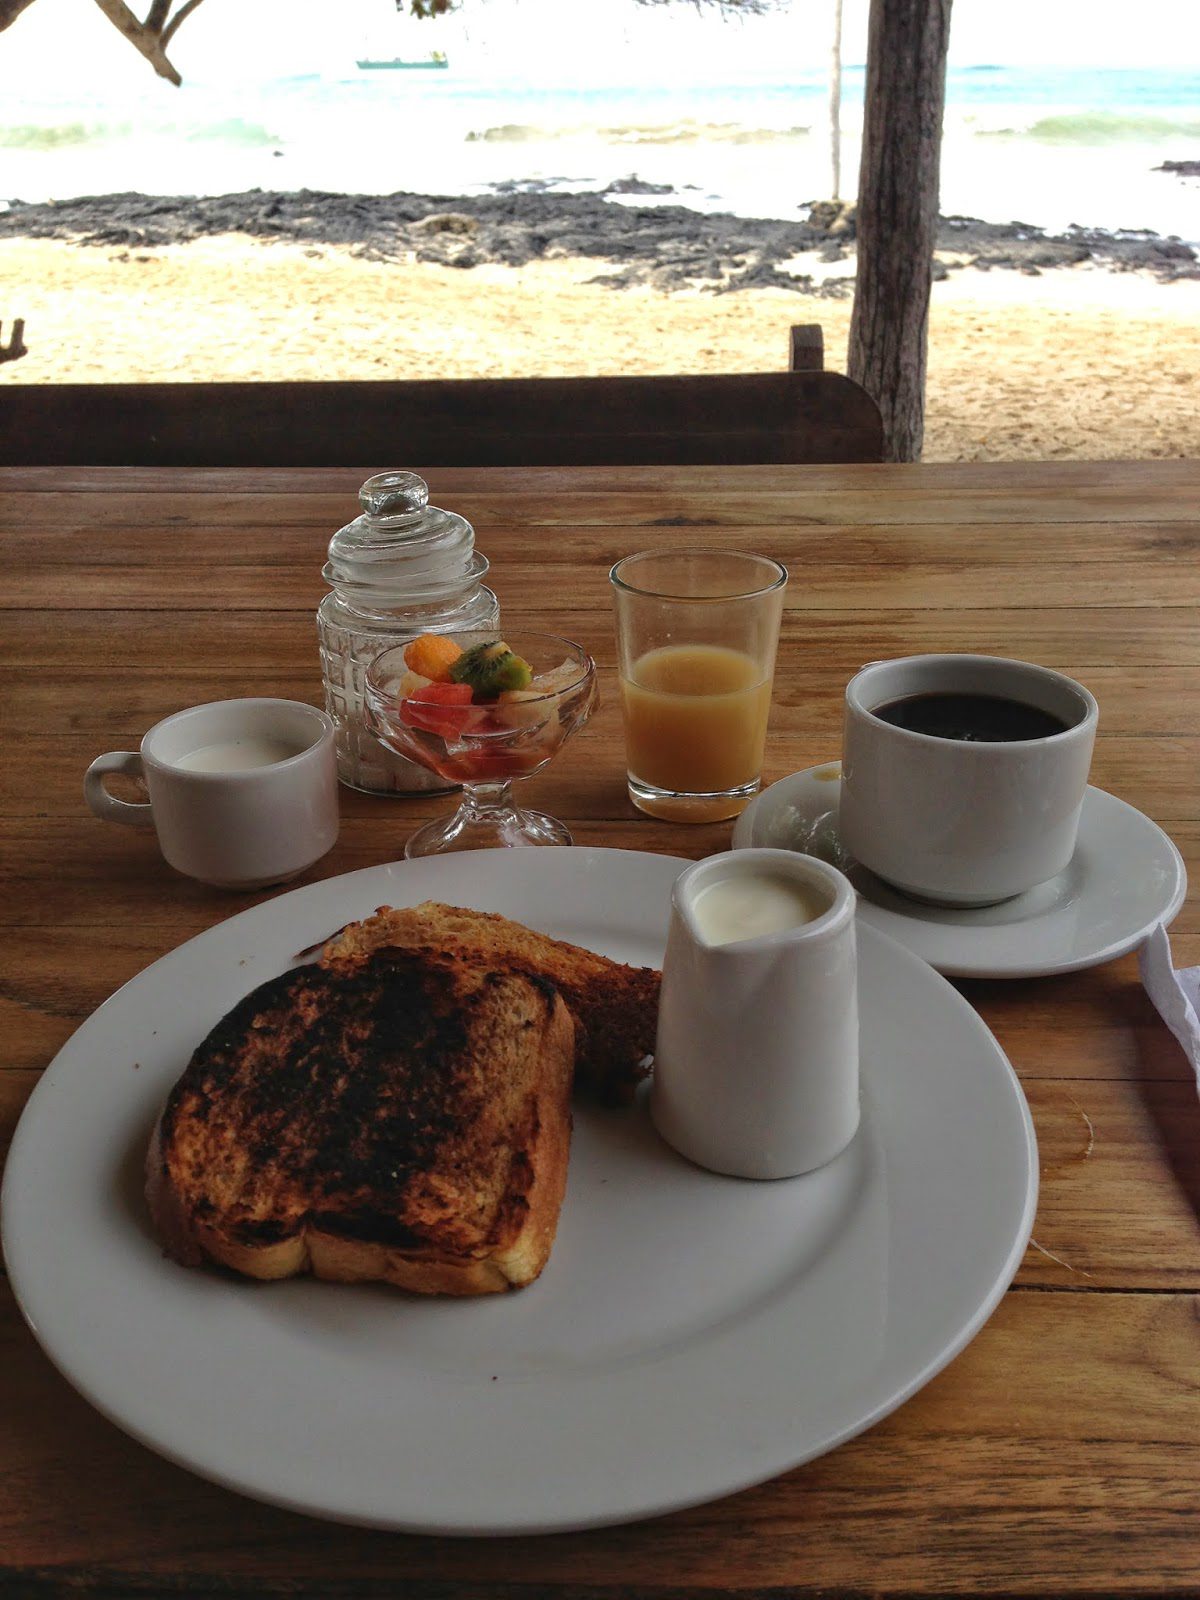 On the menu this morning: French toast, fruit cup, yogurt and honey, fresh papaya juice, and coffee. Delish.